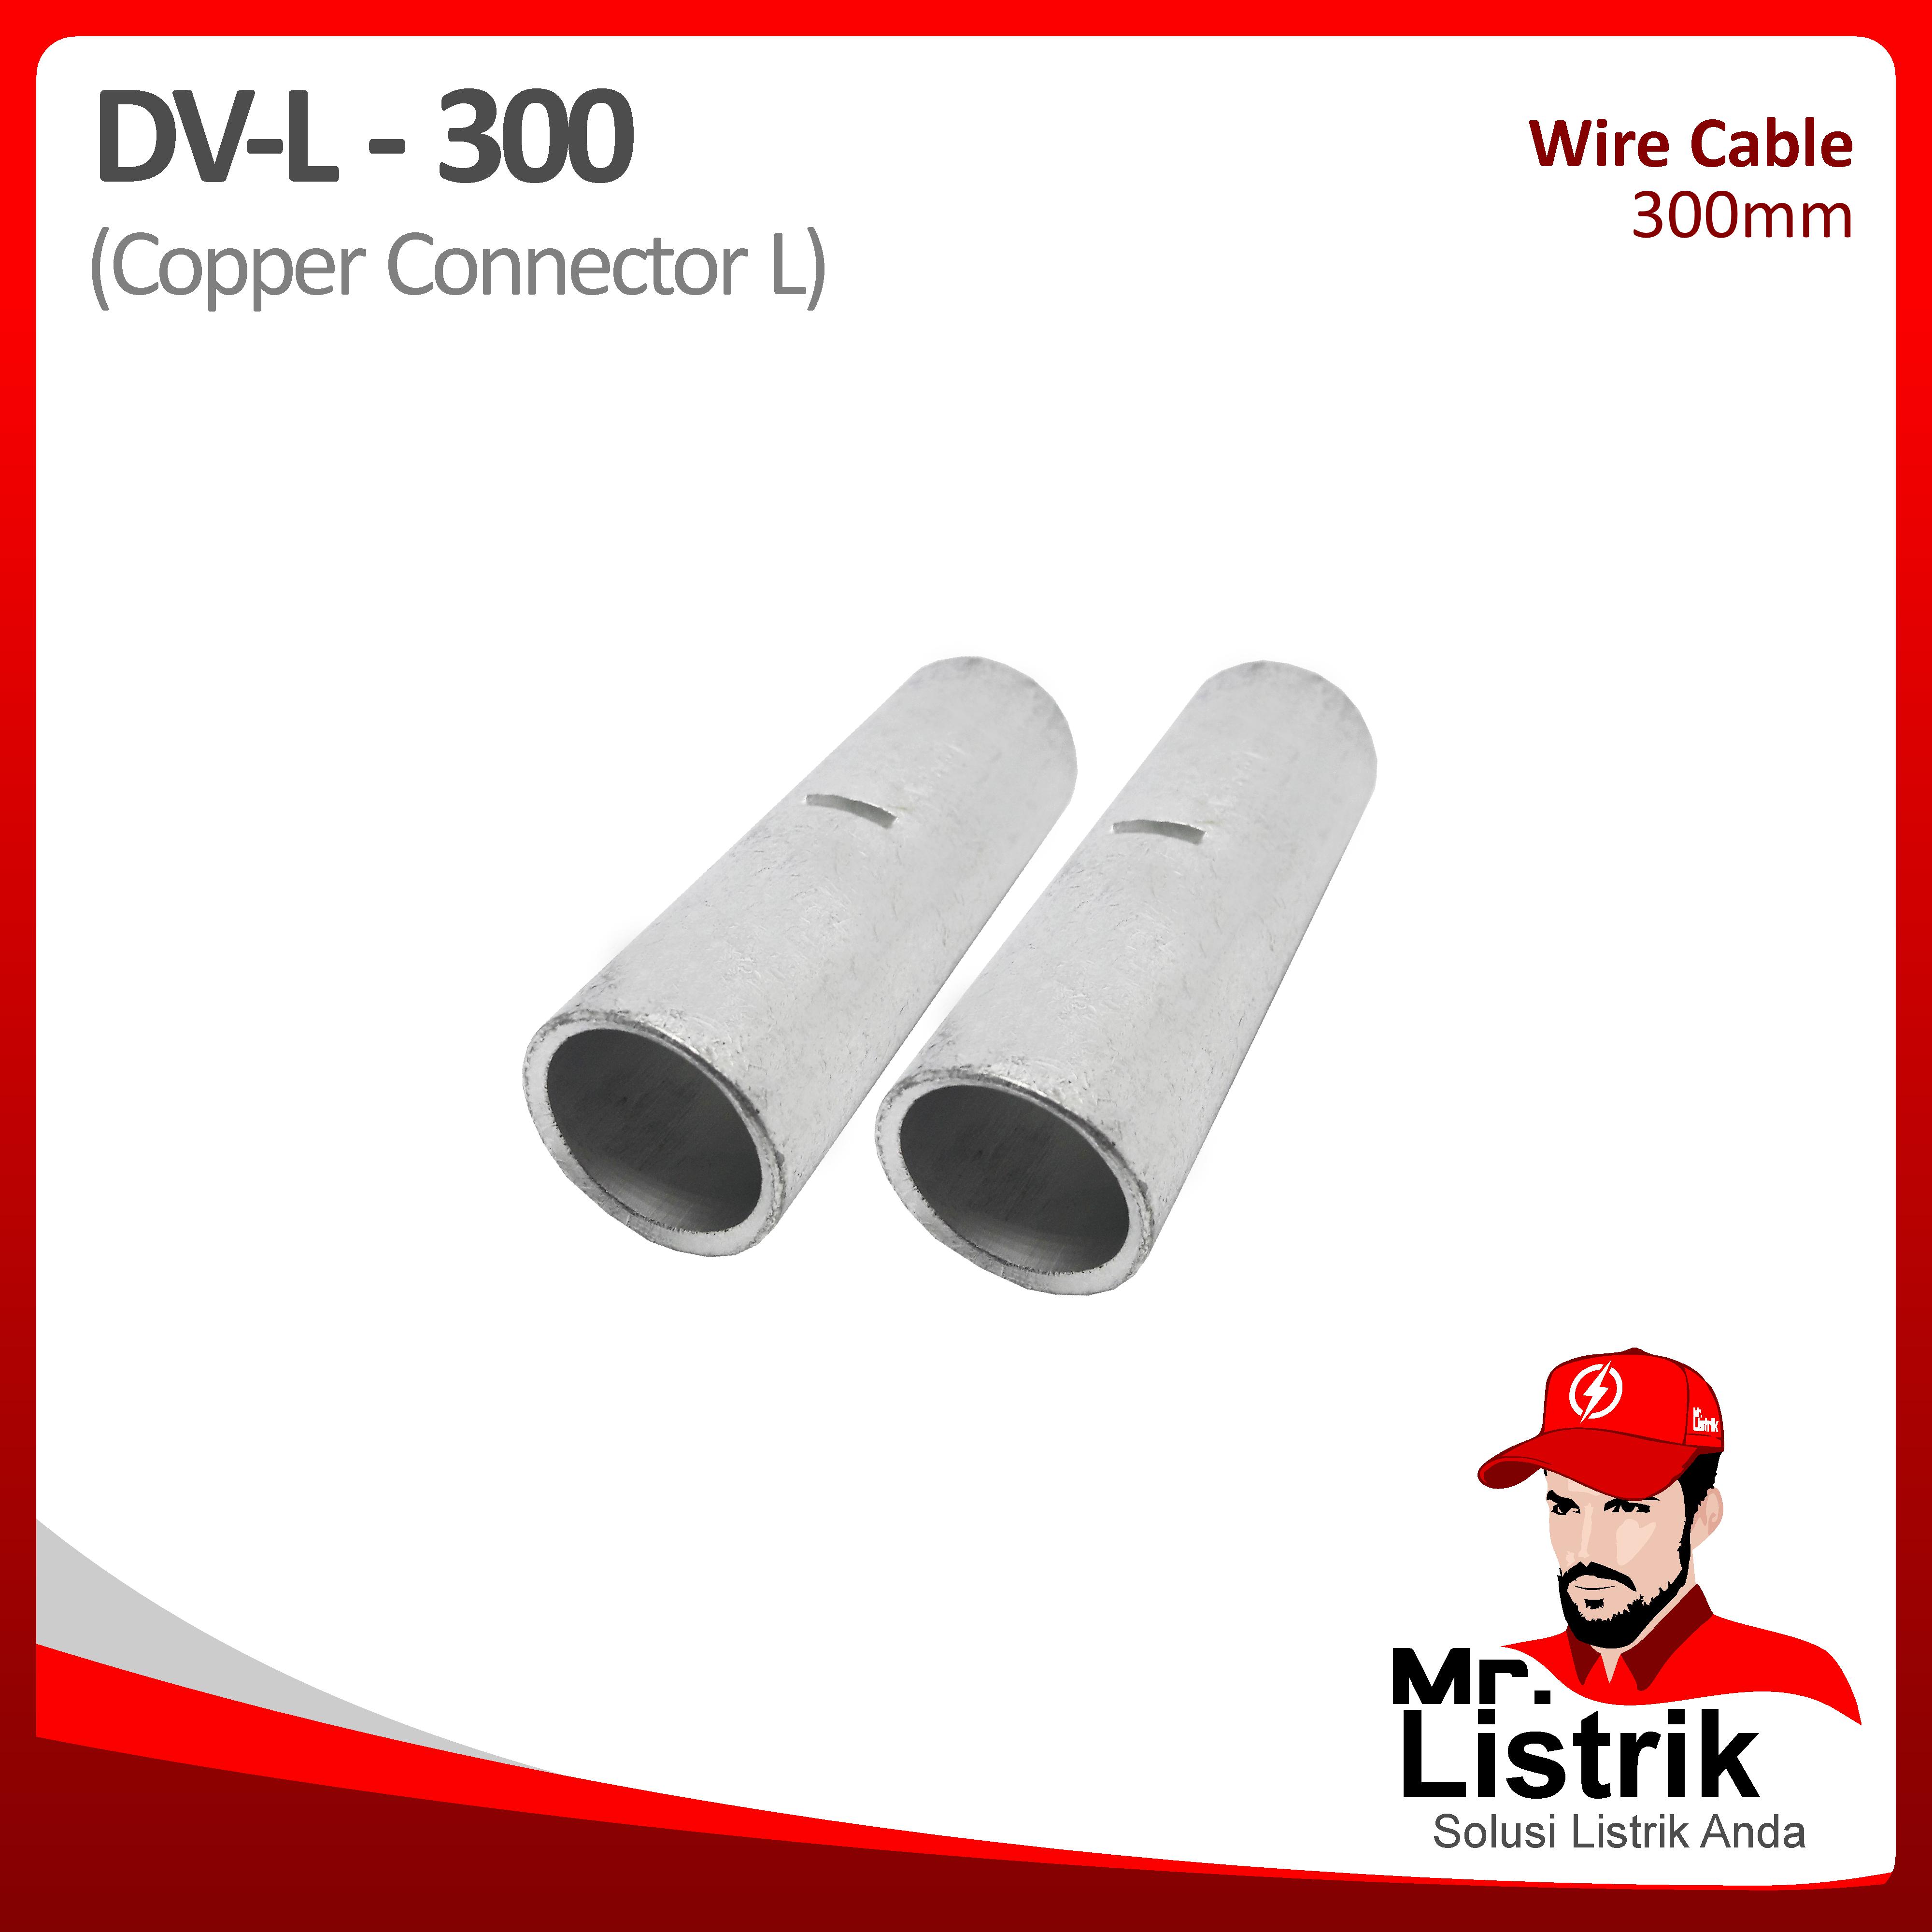 Copper Connector-L 300mm DV L-300